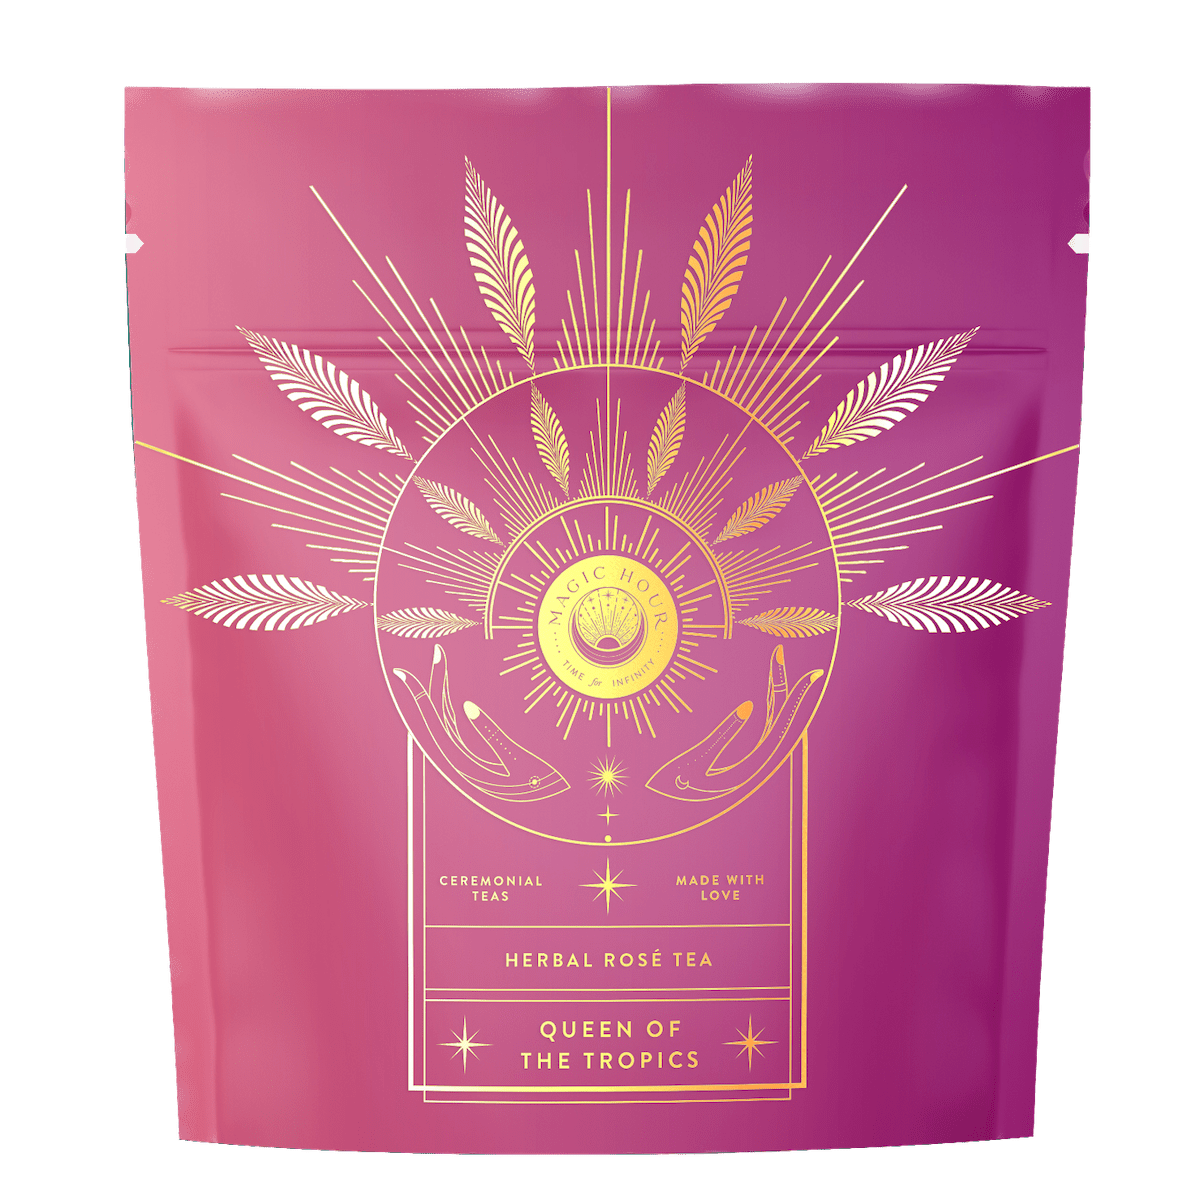 Queen of Tropics Herbal Rose Tea packaging